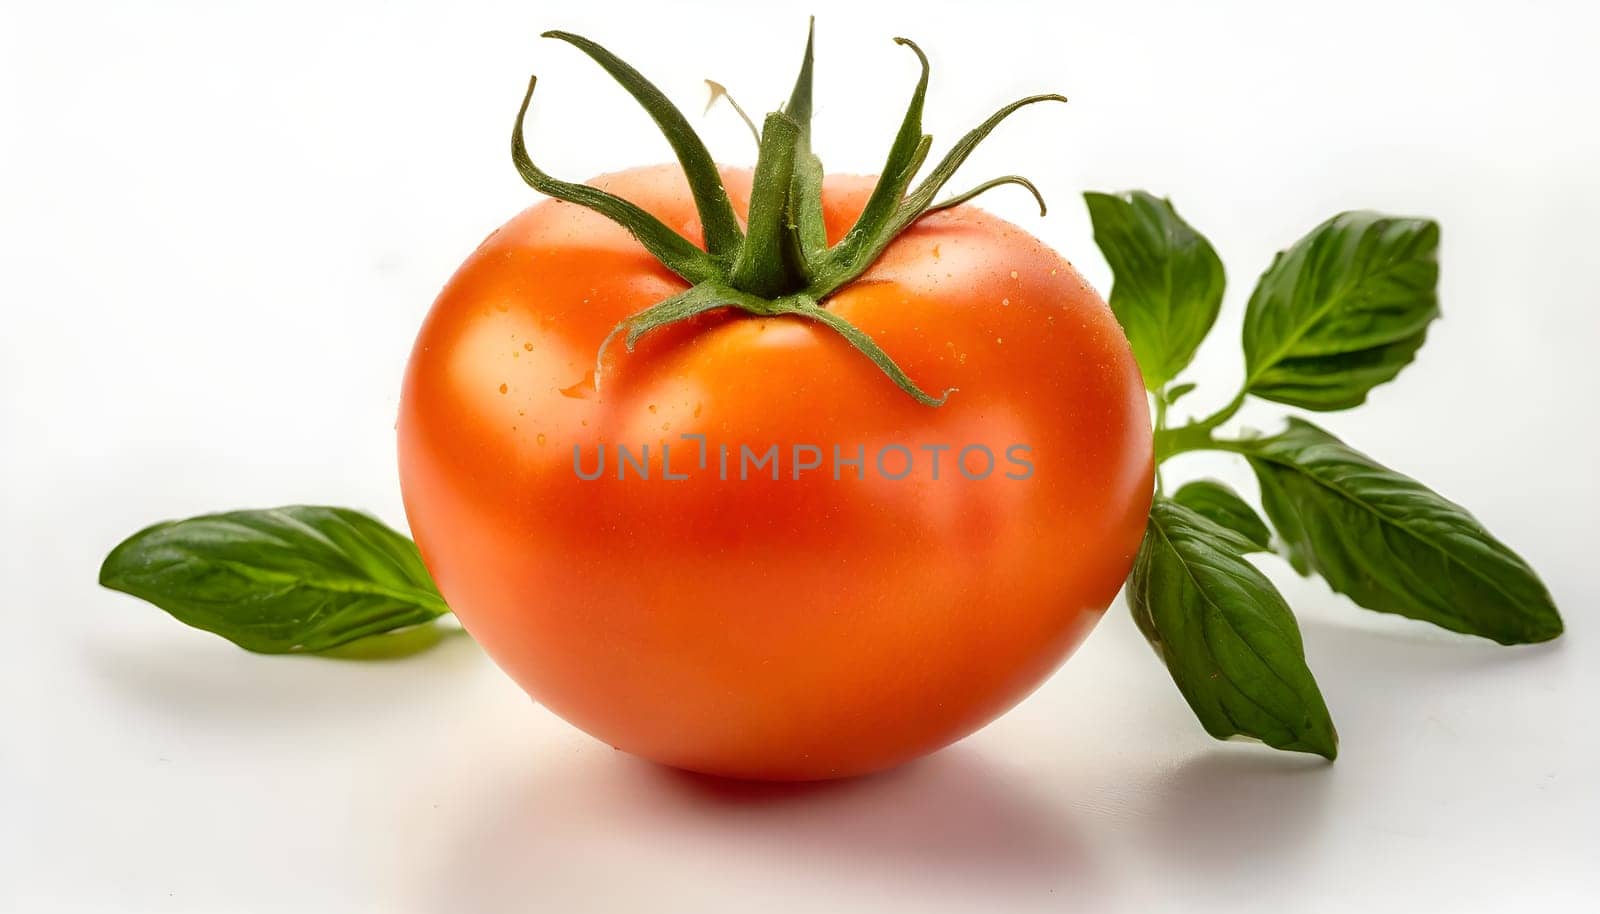 Full Tomato isolated on white backdrop. High quality photo